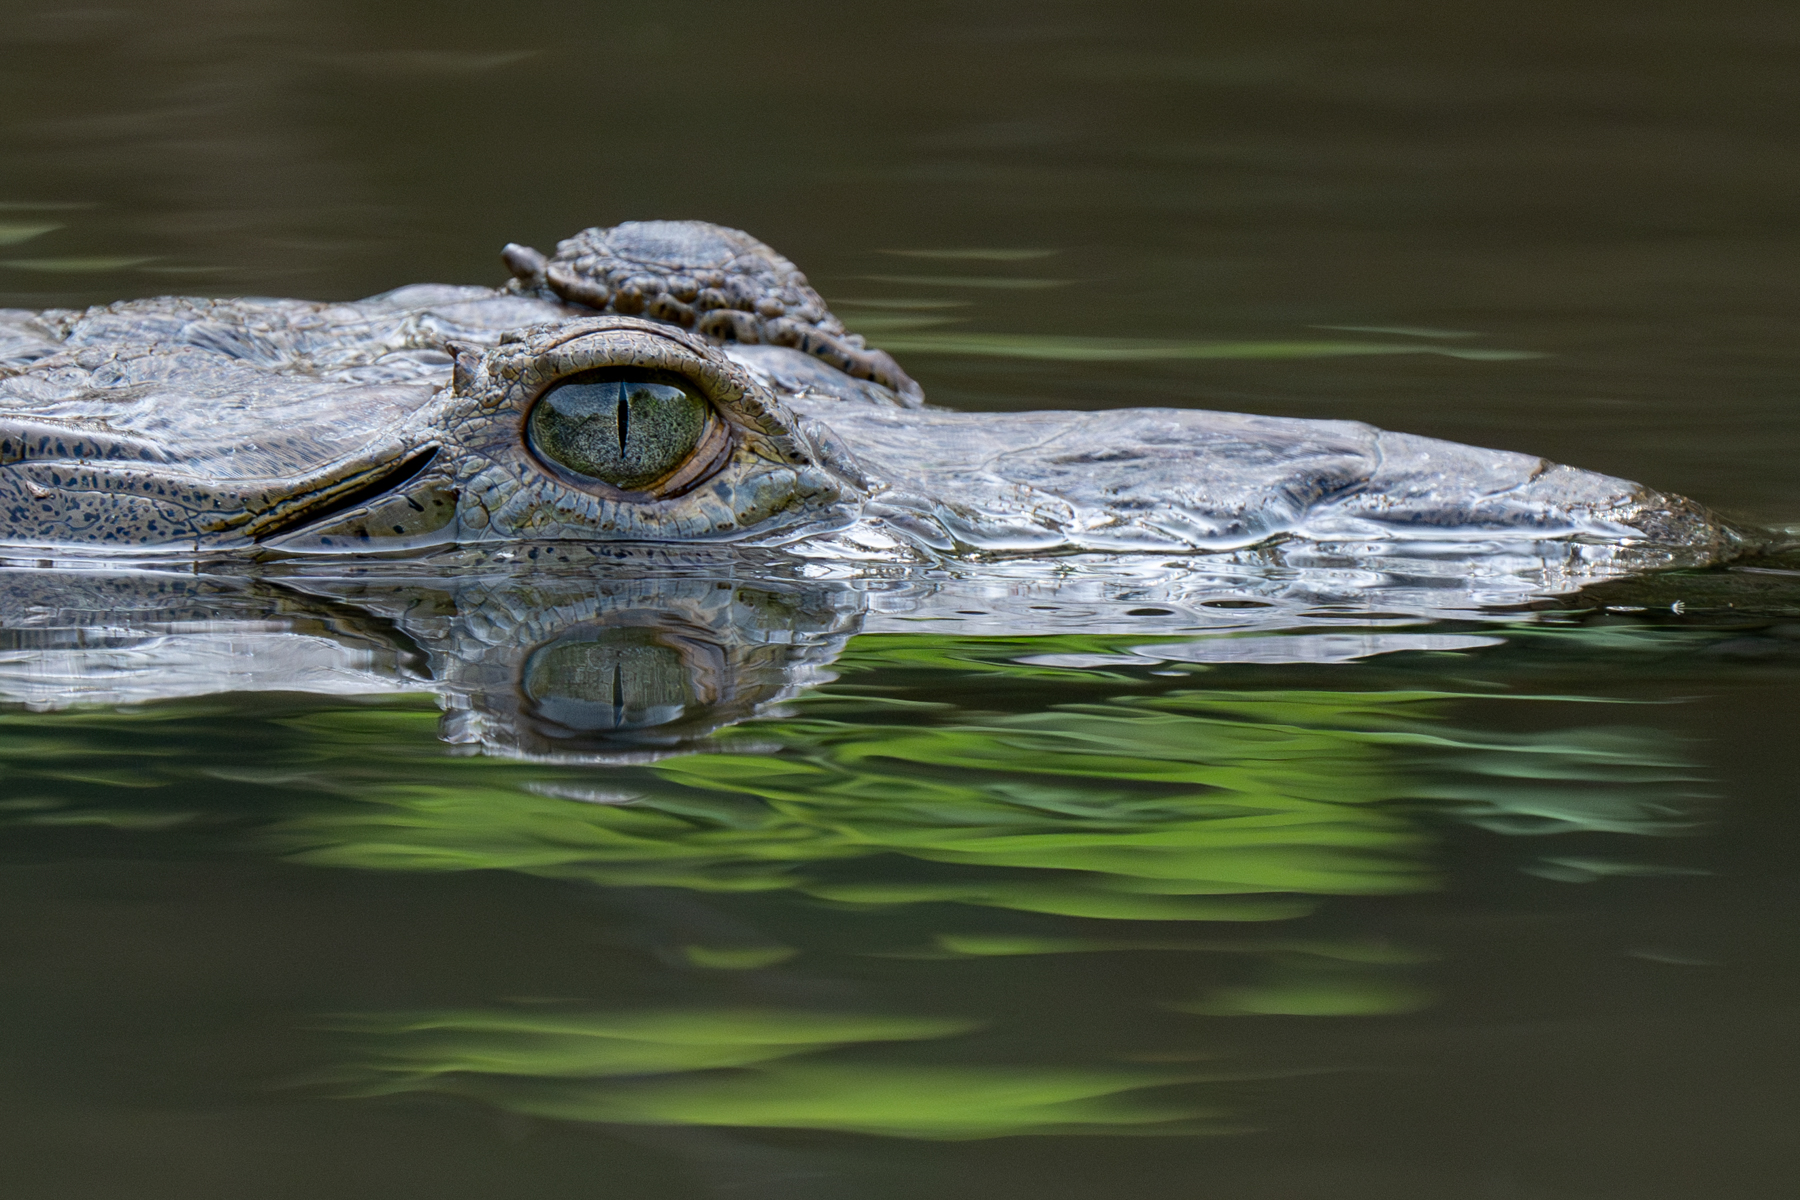 The sly eye of a crocodile (image by Inger Vandyke)